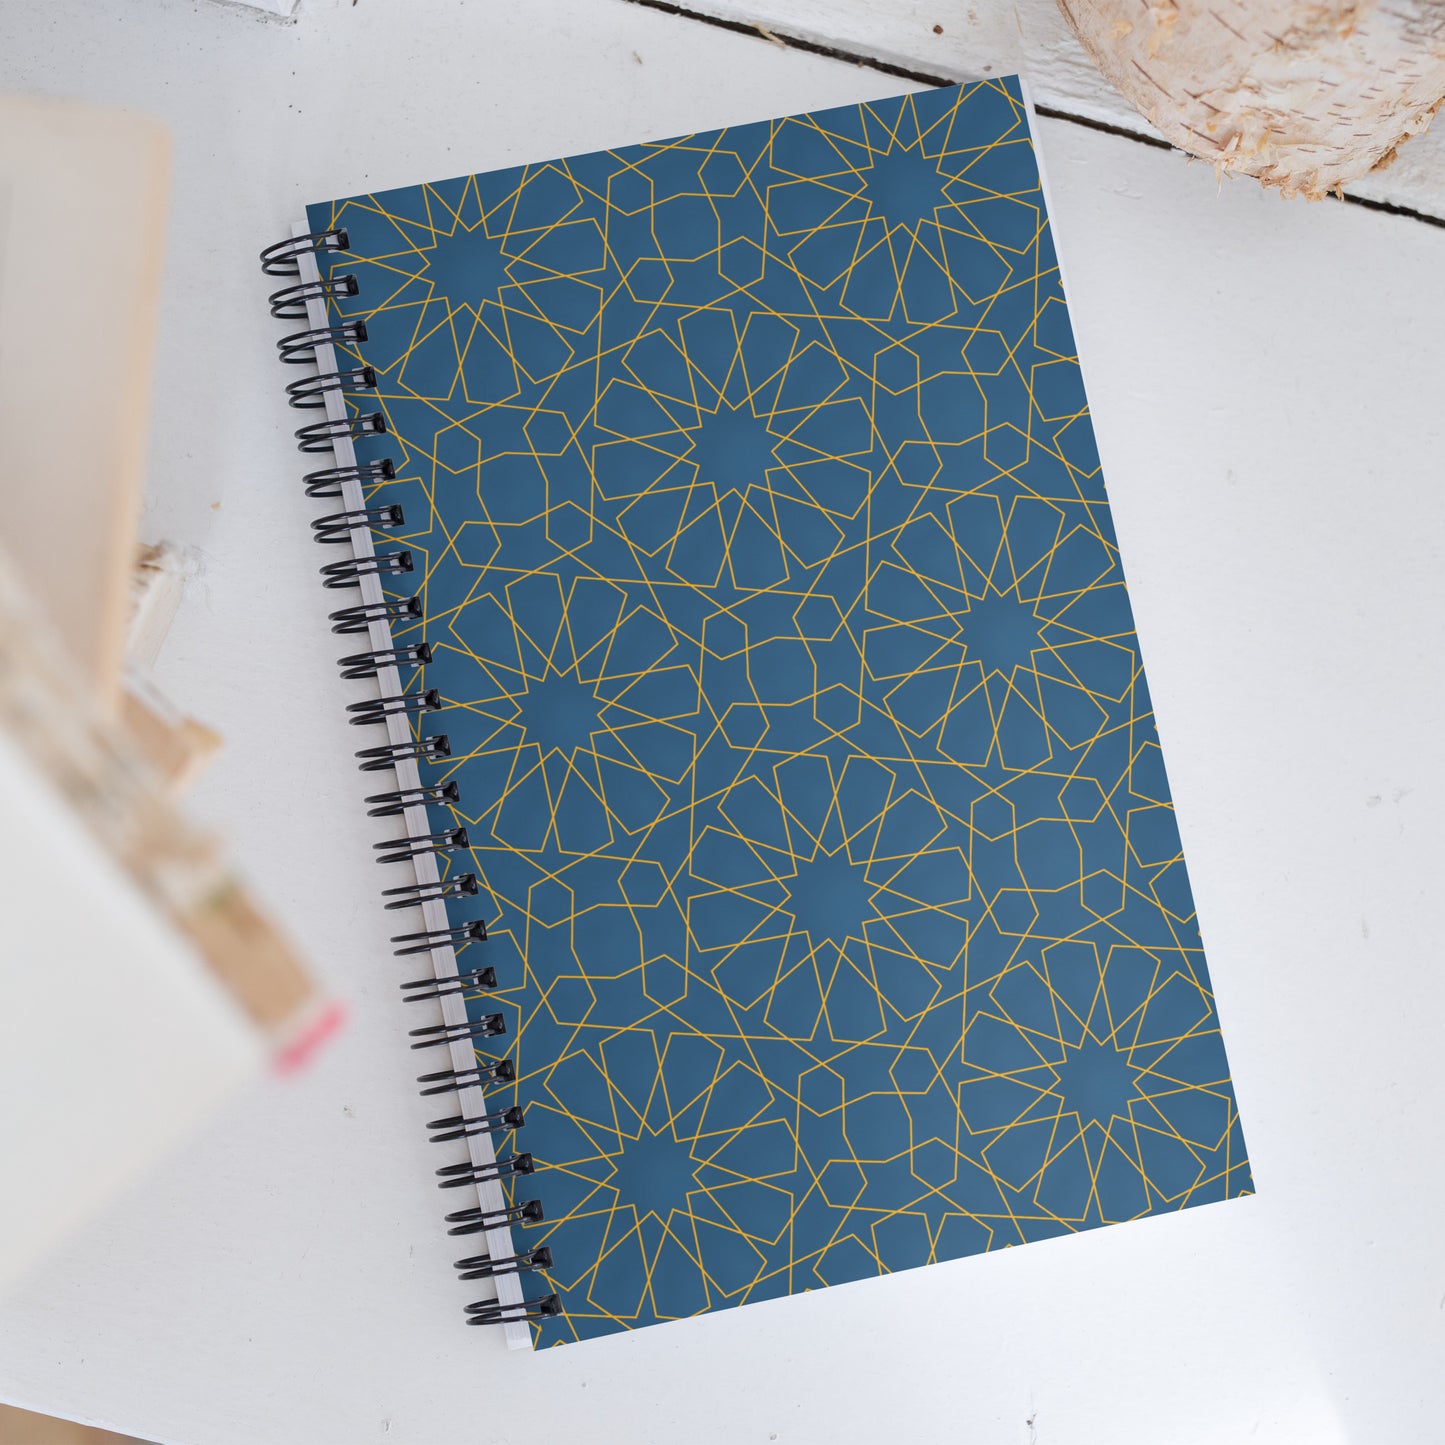 Islamic Print - Spiral notebook